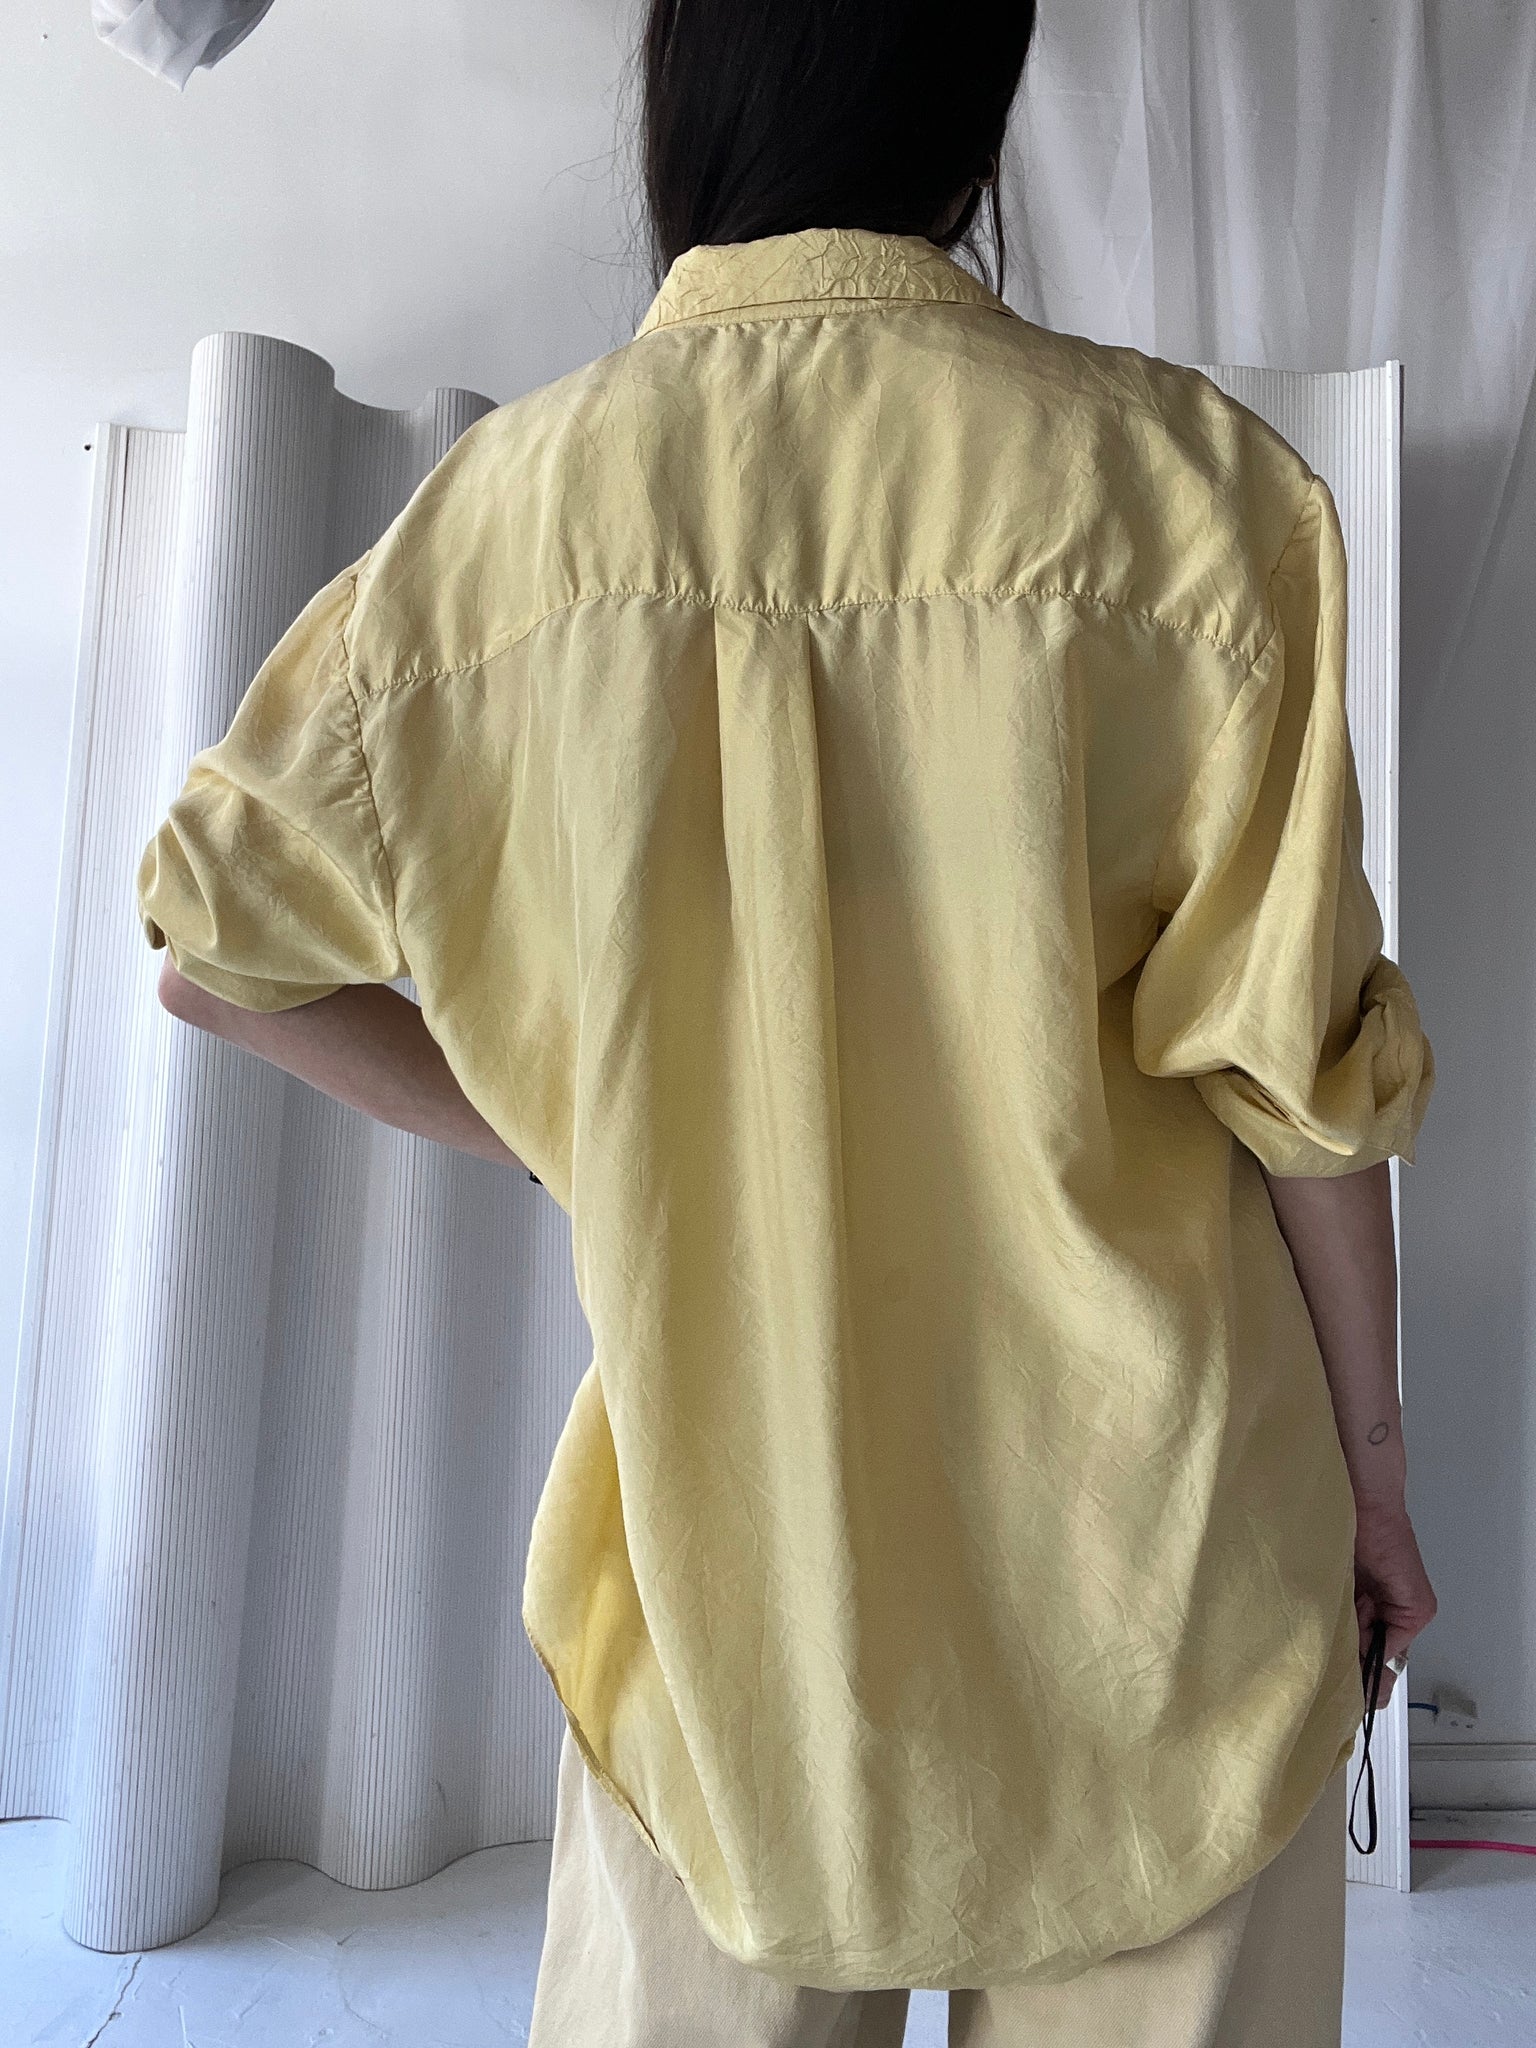 Crinkly Yellow Shirt